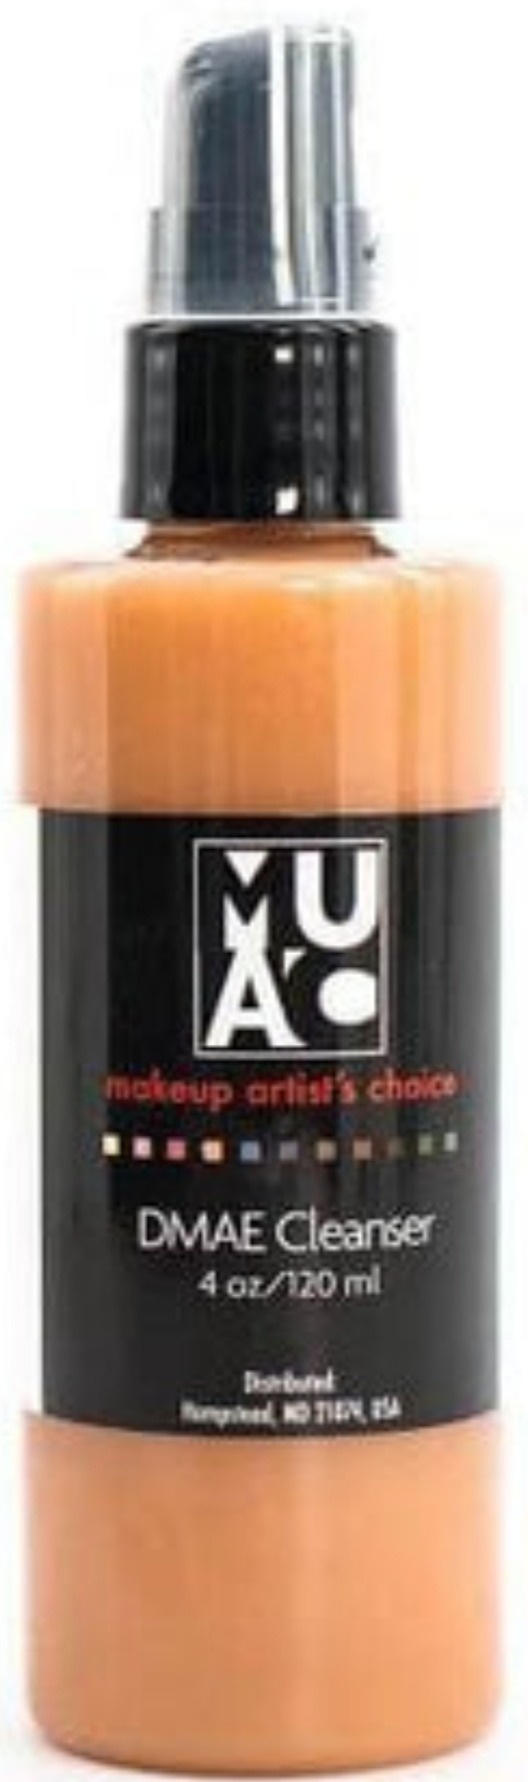 Makeup Artist's Choice Anti-Aging DMAE Cleanser